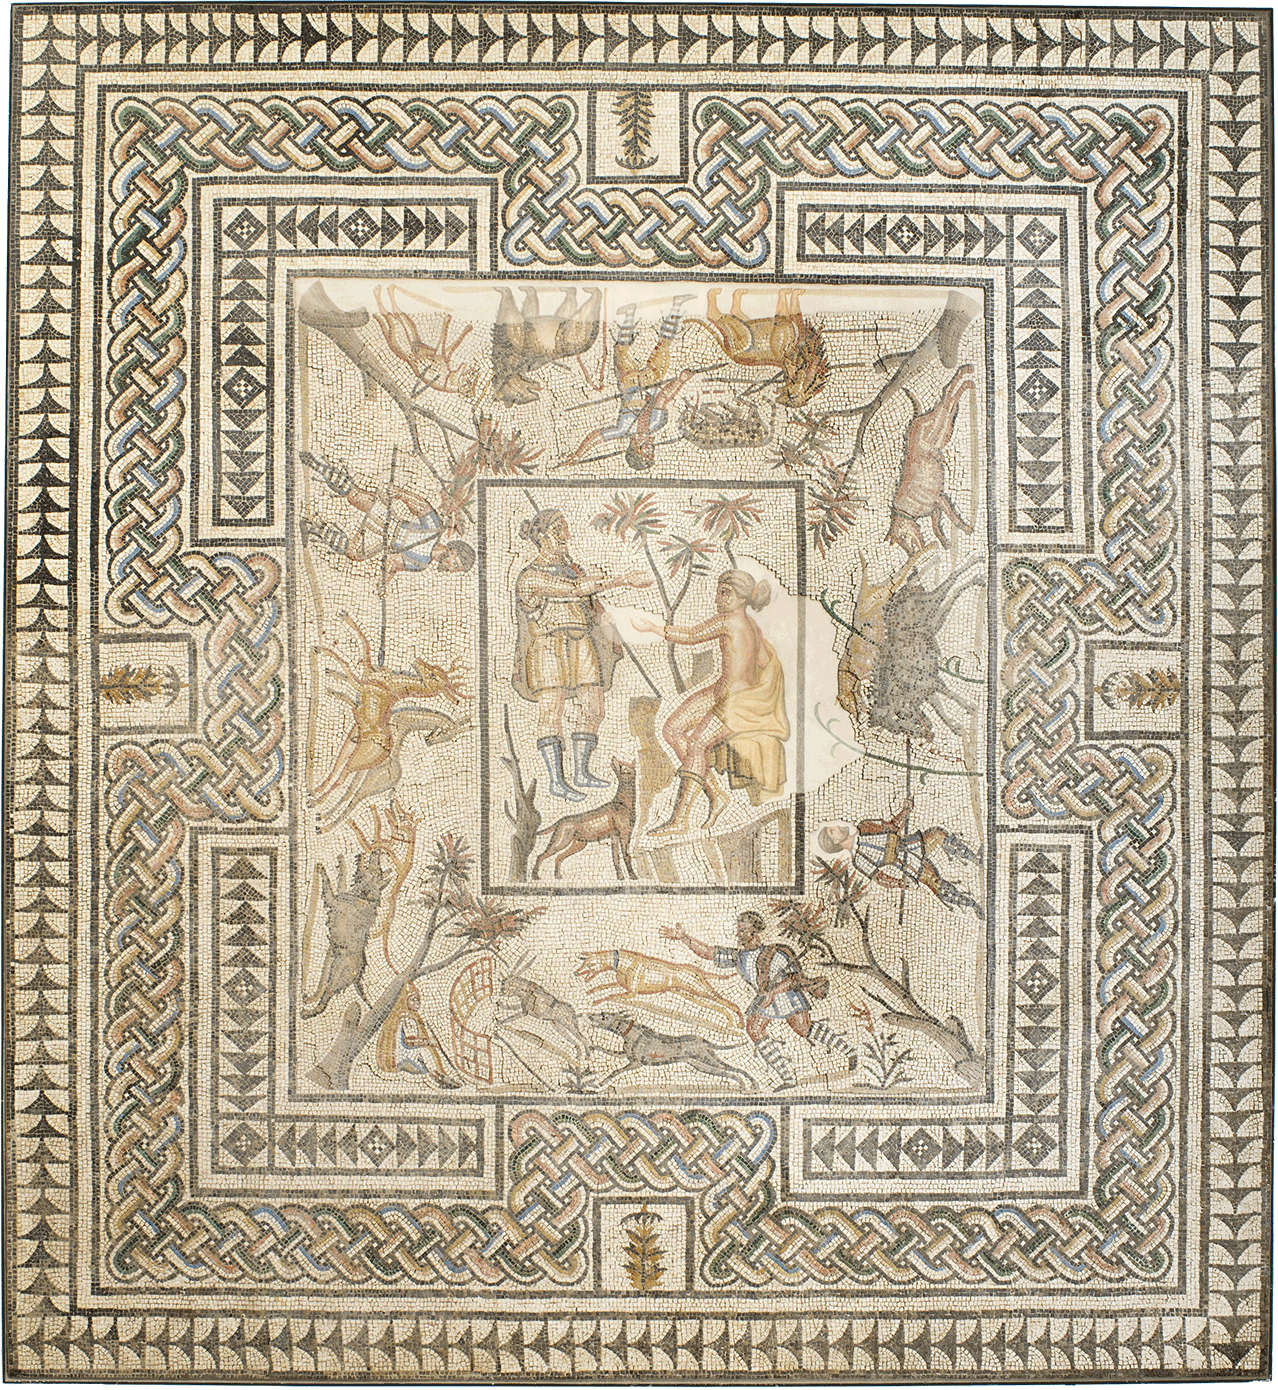 Figure 14. Mosaic Floor with Diana and Callisto